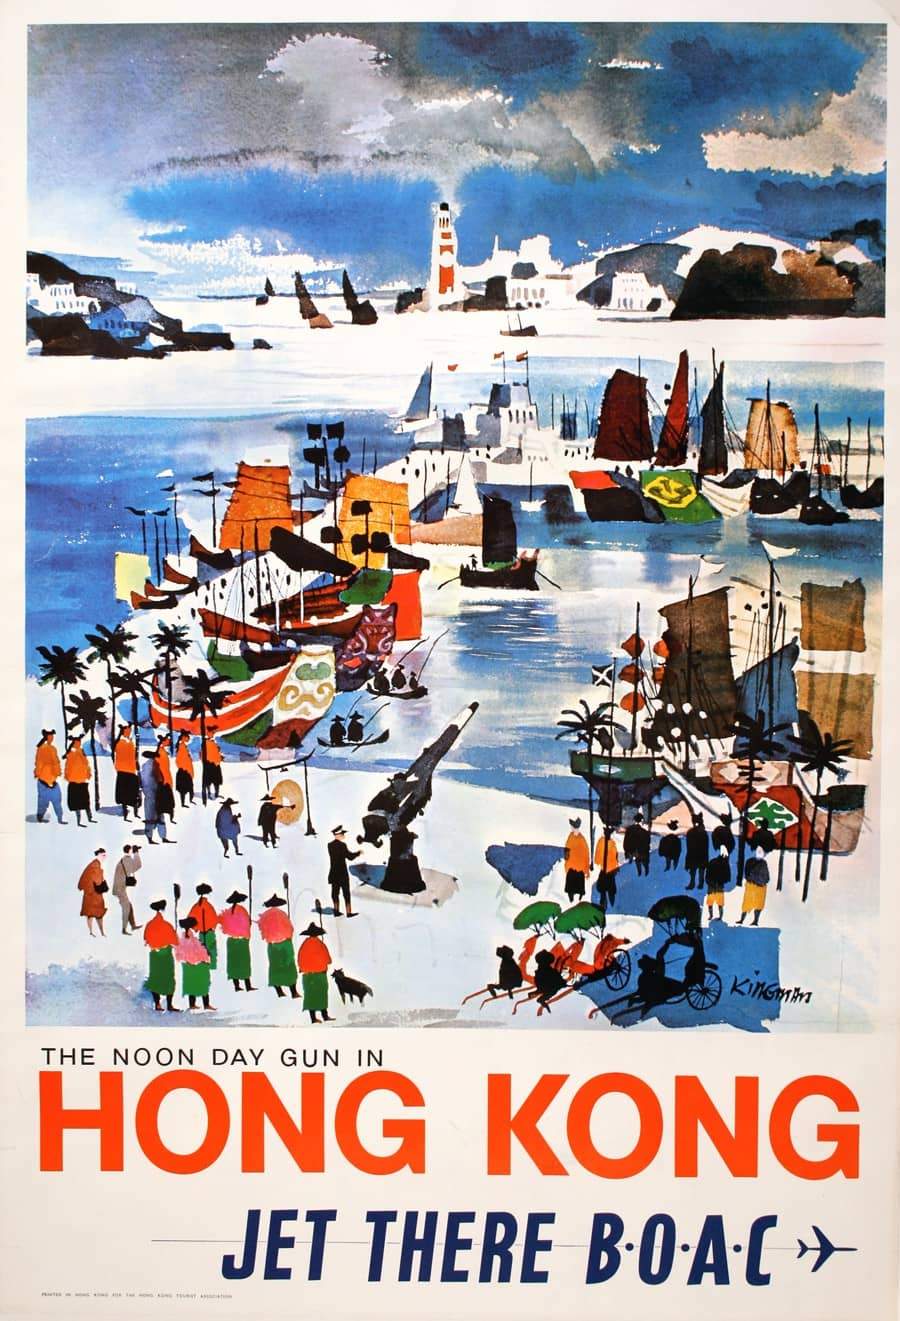 Hong Kong Jet There by BOAC Original Poster c1955 by Dong Kingman